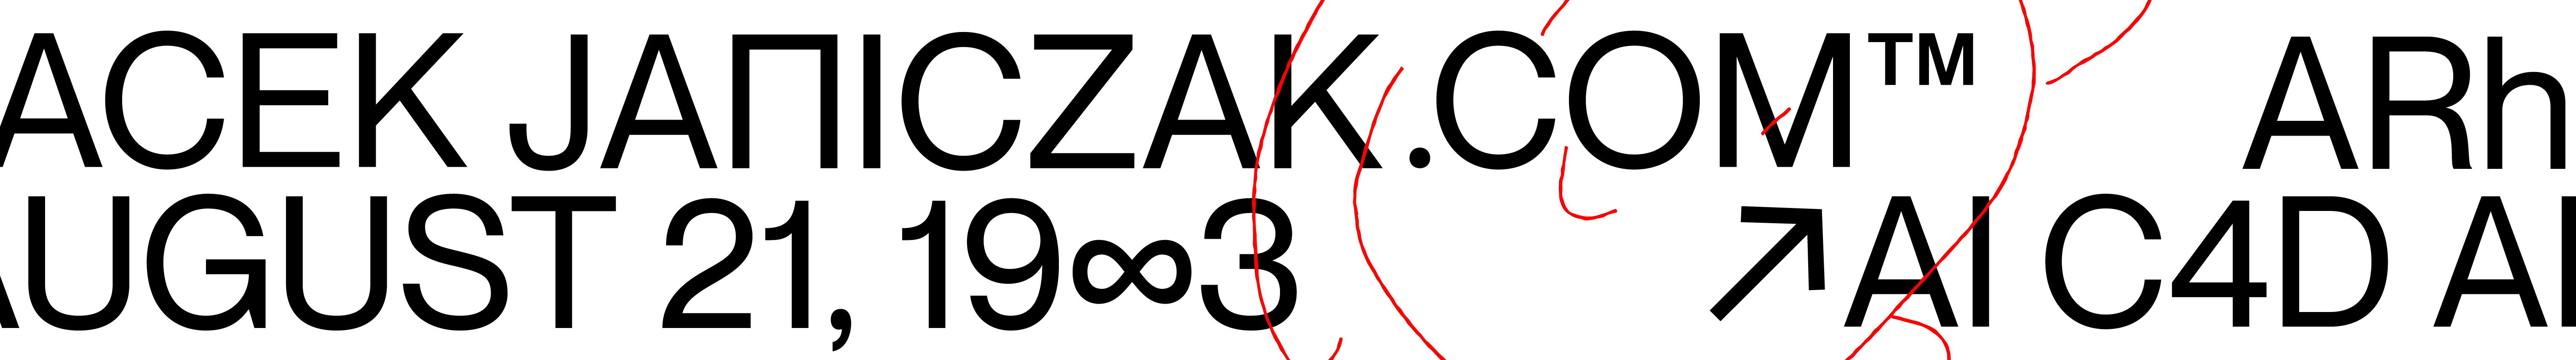 Jacek Janiczak's profile banner